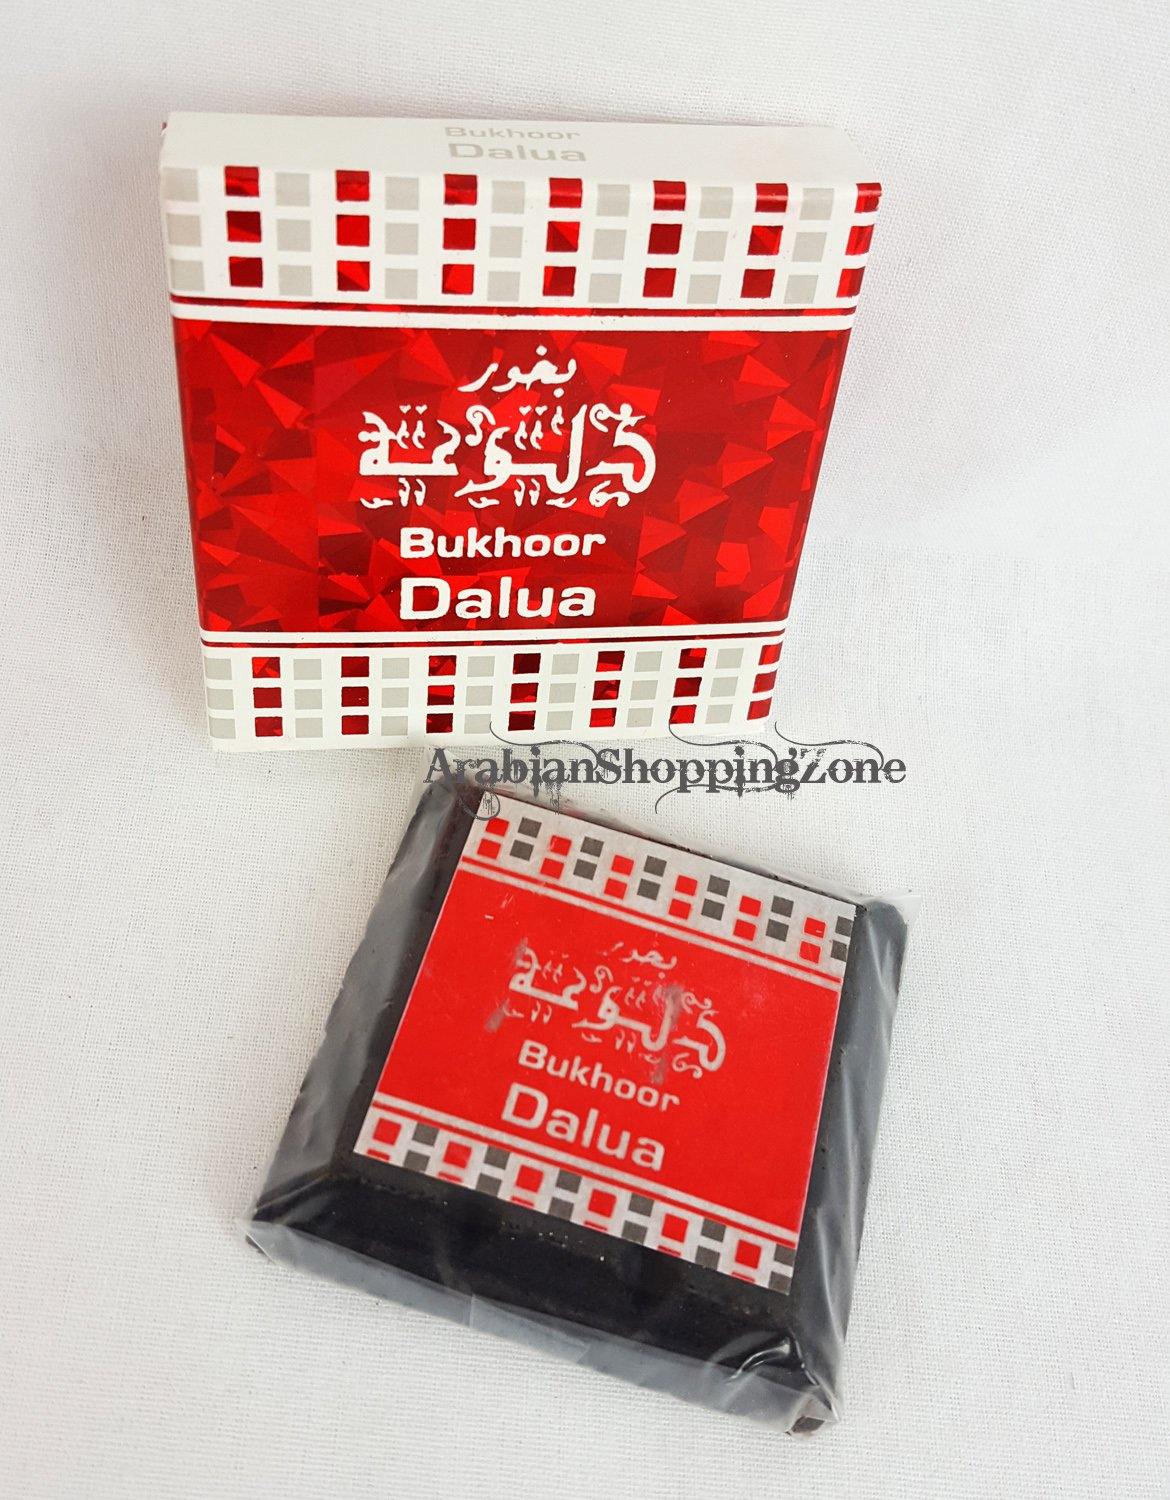 50-type ARD ALZAAFARAN Bakhoor Incense Collection 40g - Arabian Shopping Zone